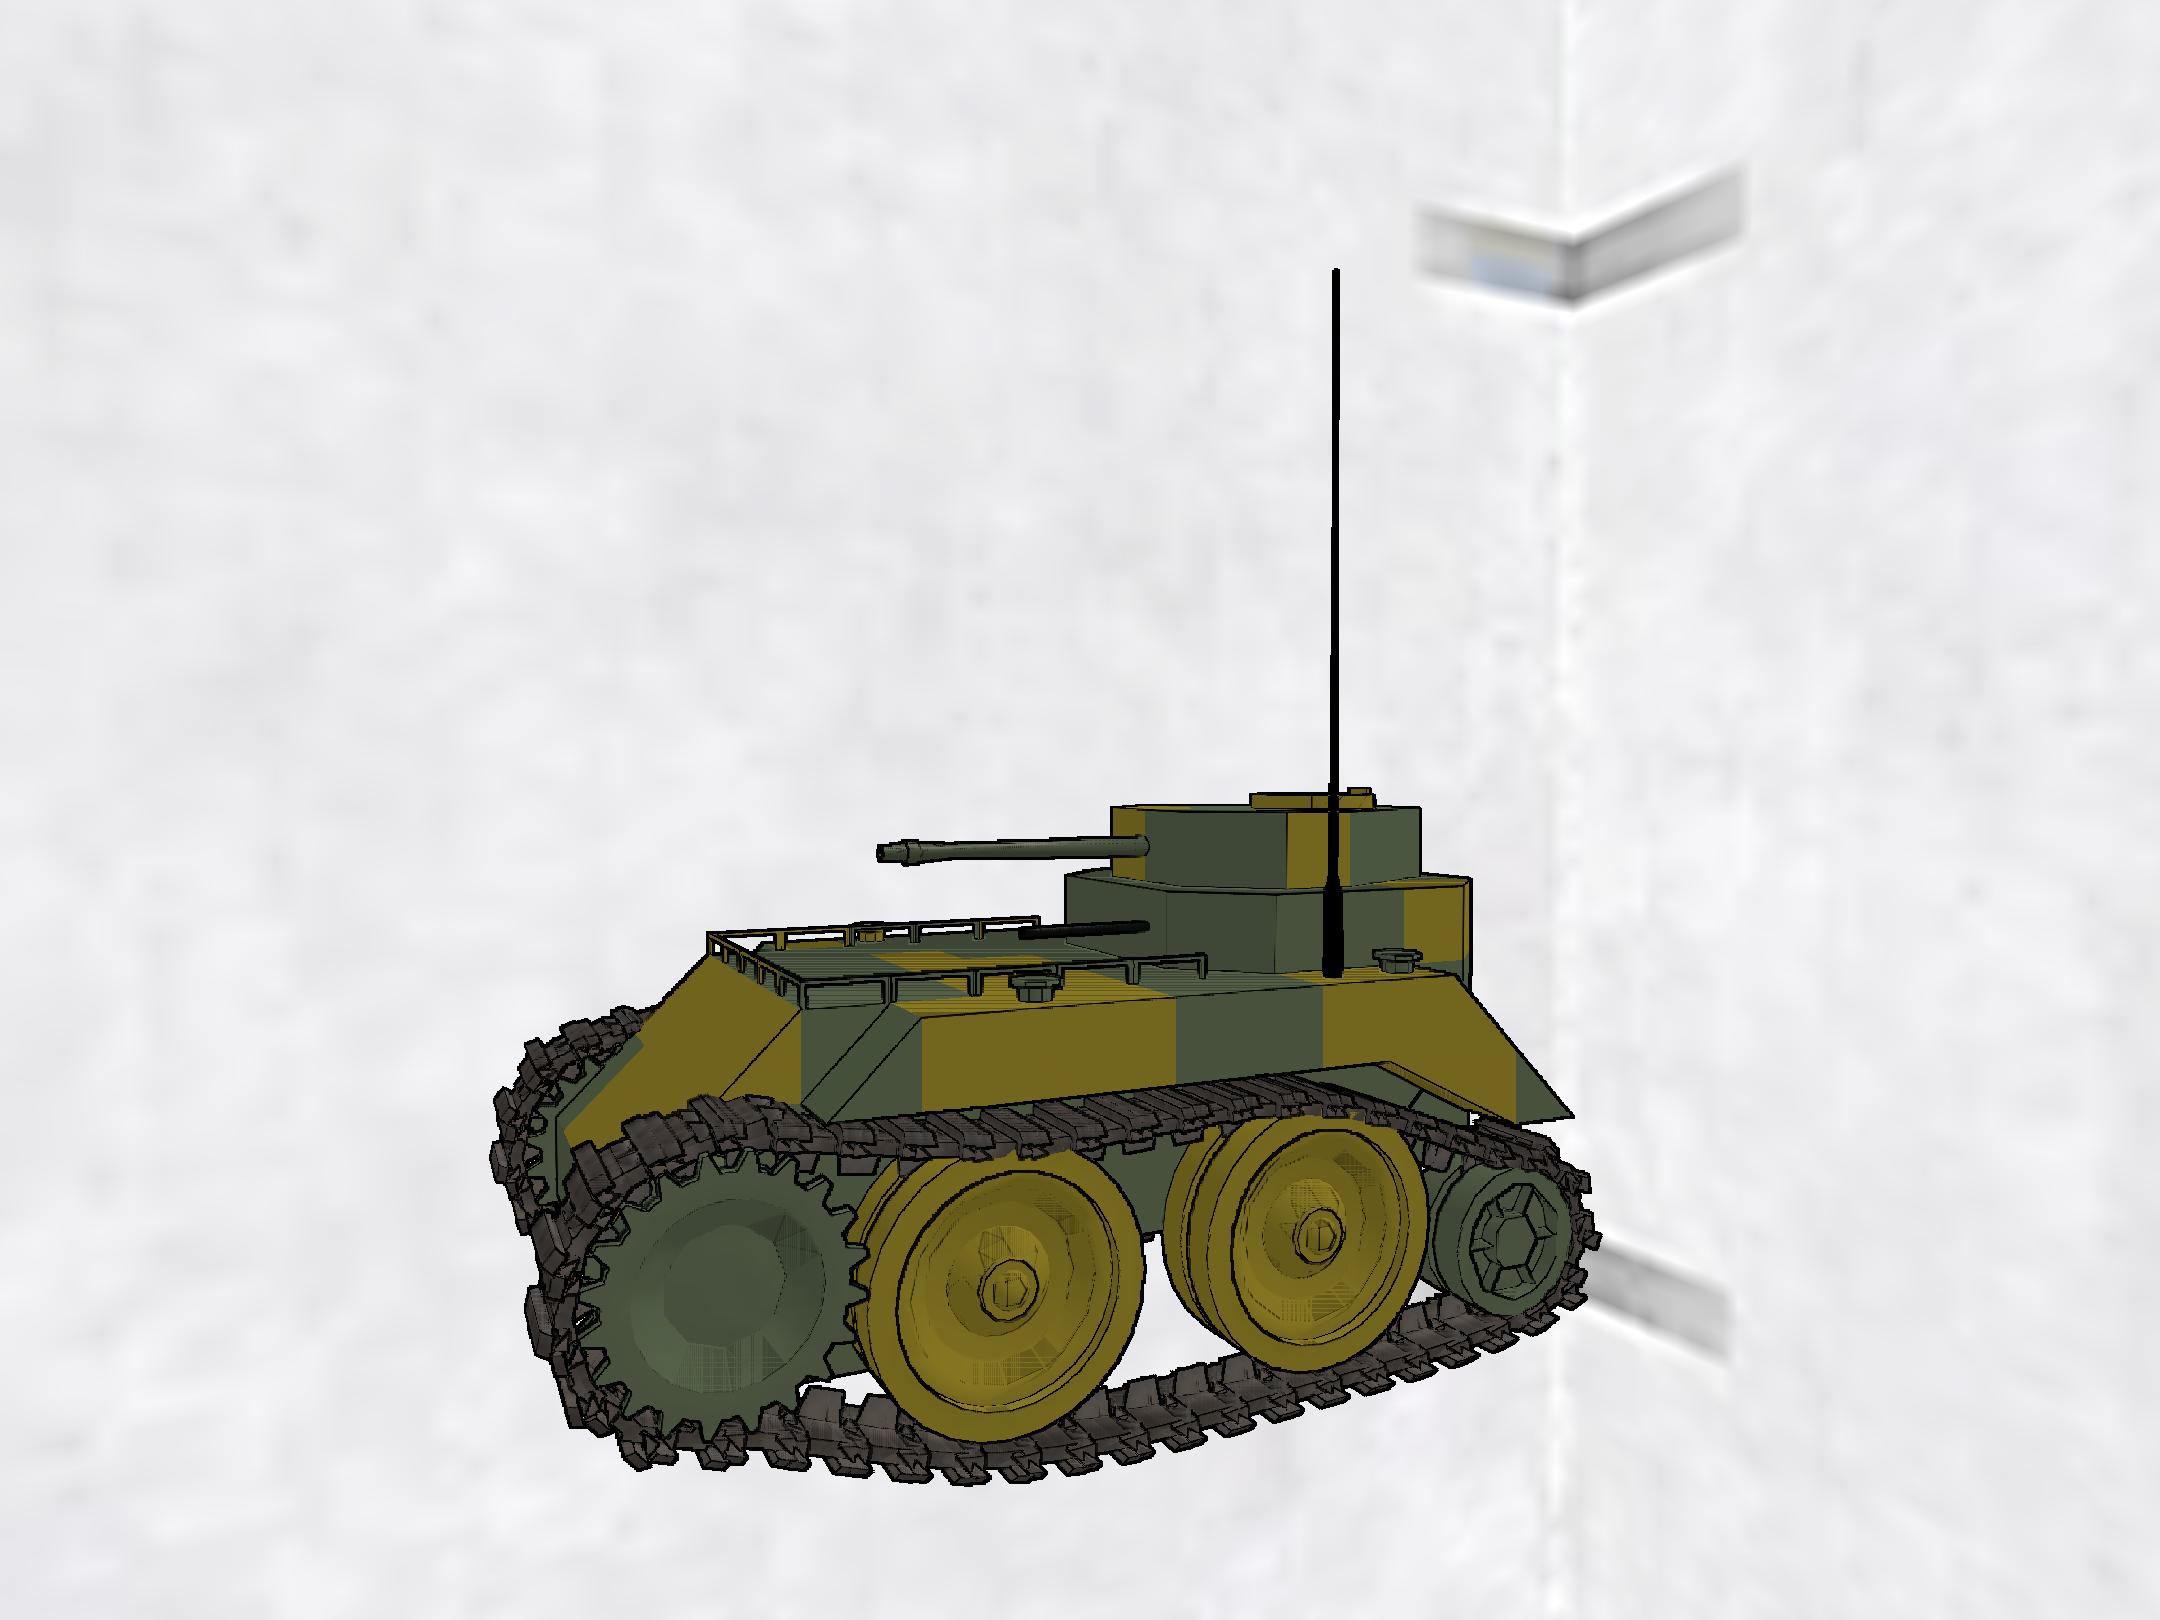 Infantry transport vehicle